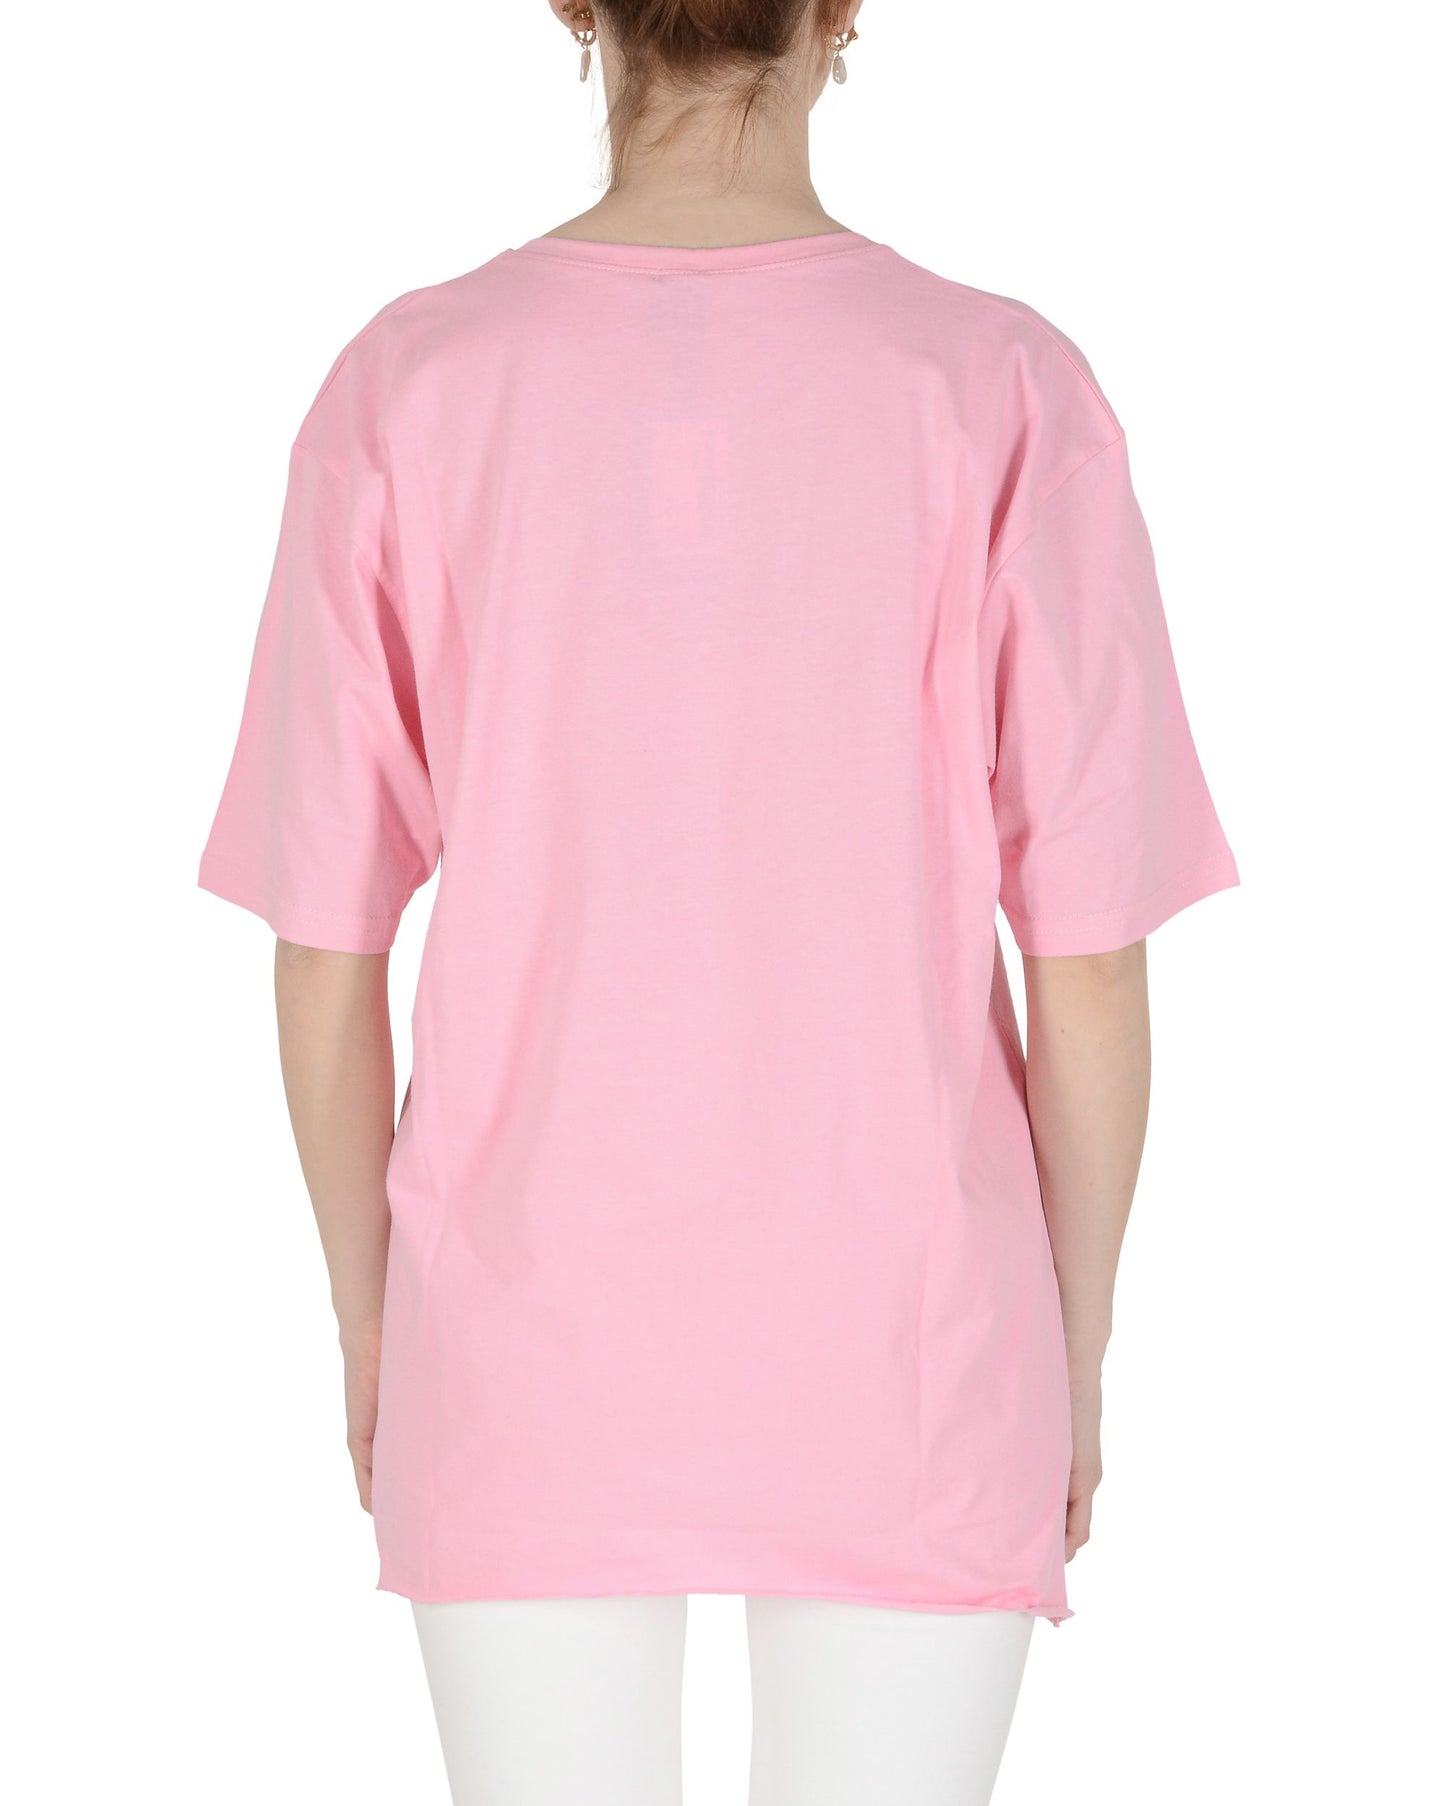 19V69 Italia Womens T-Shirt Pink SMILE PINK